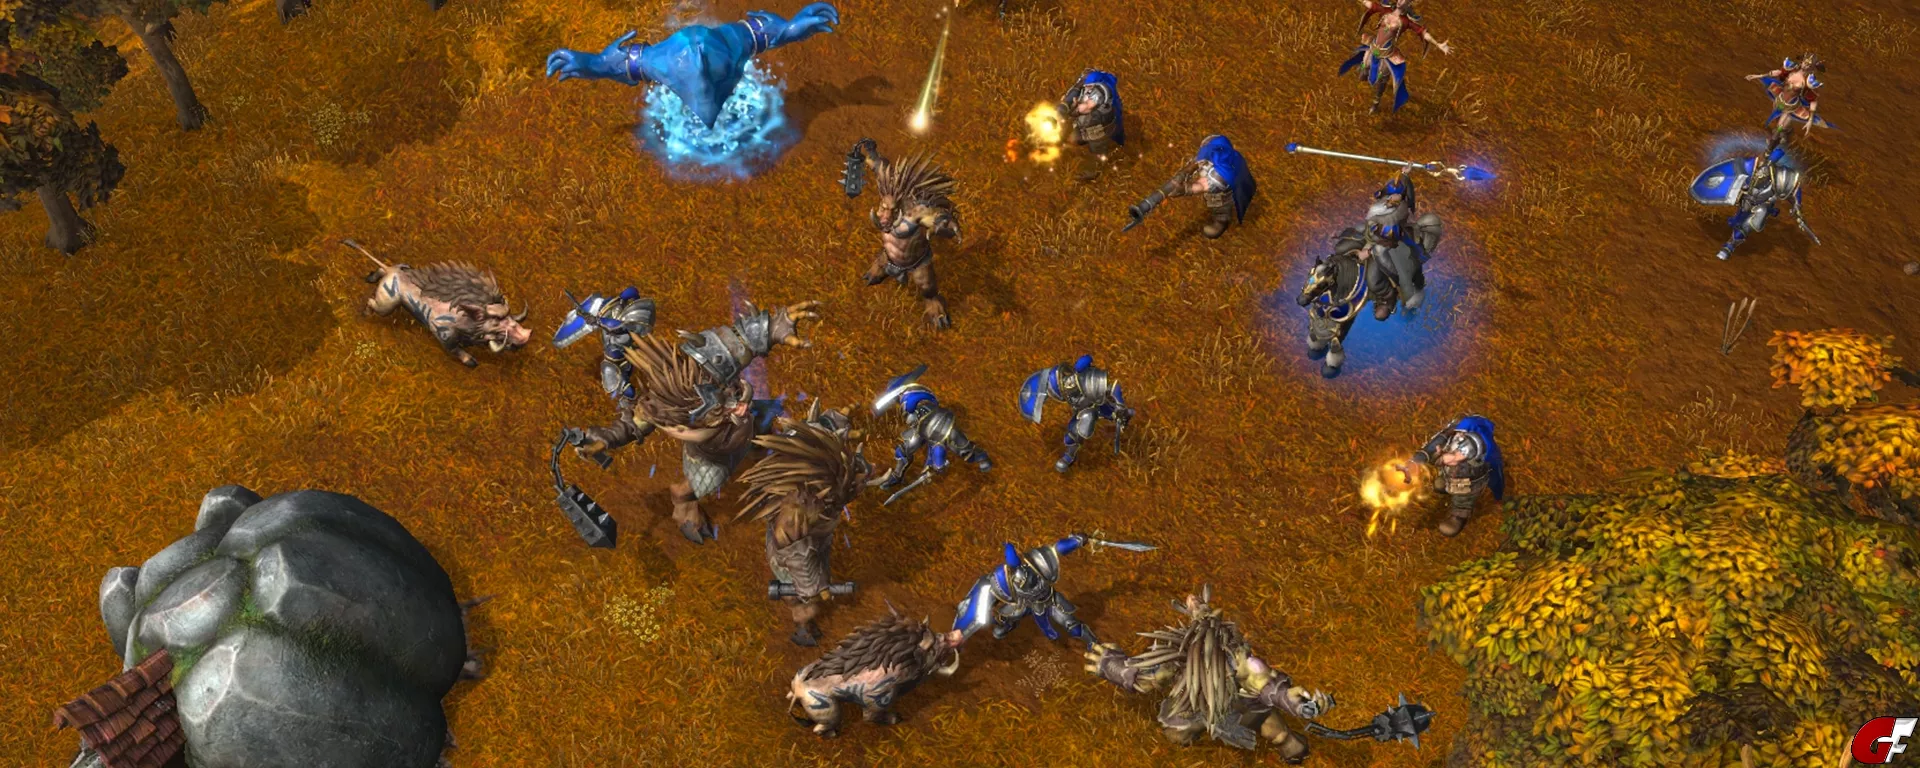 Warcraft III Reforged Screens 4